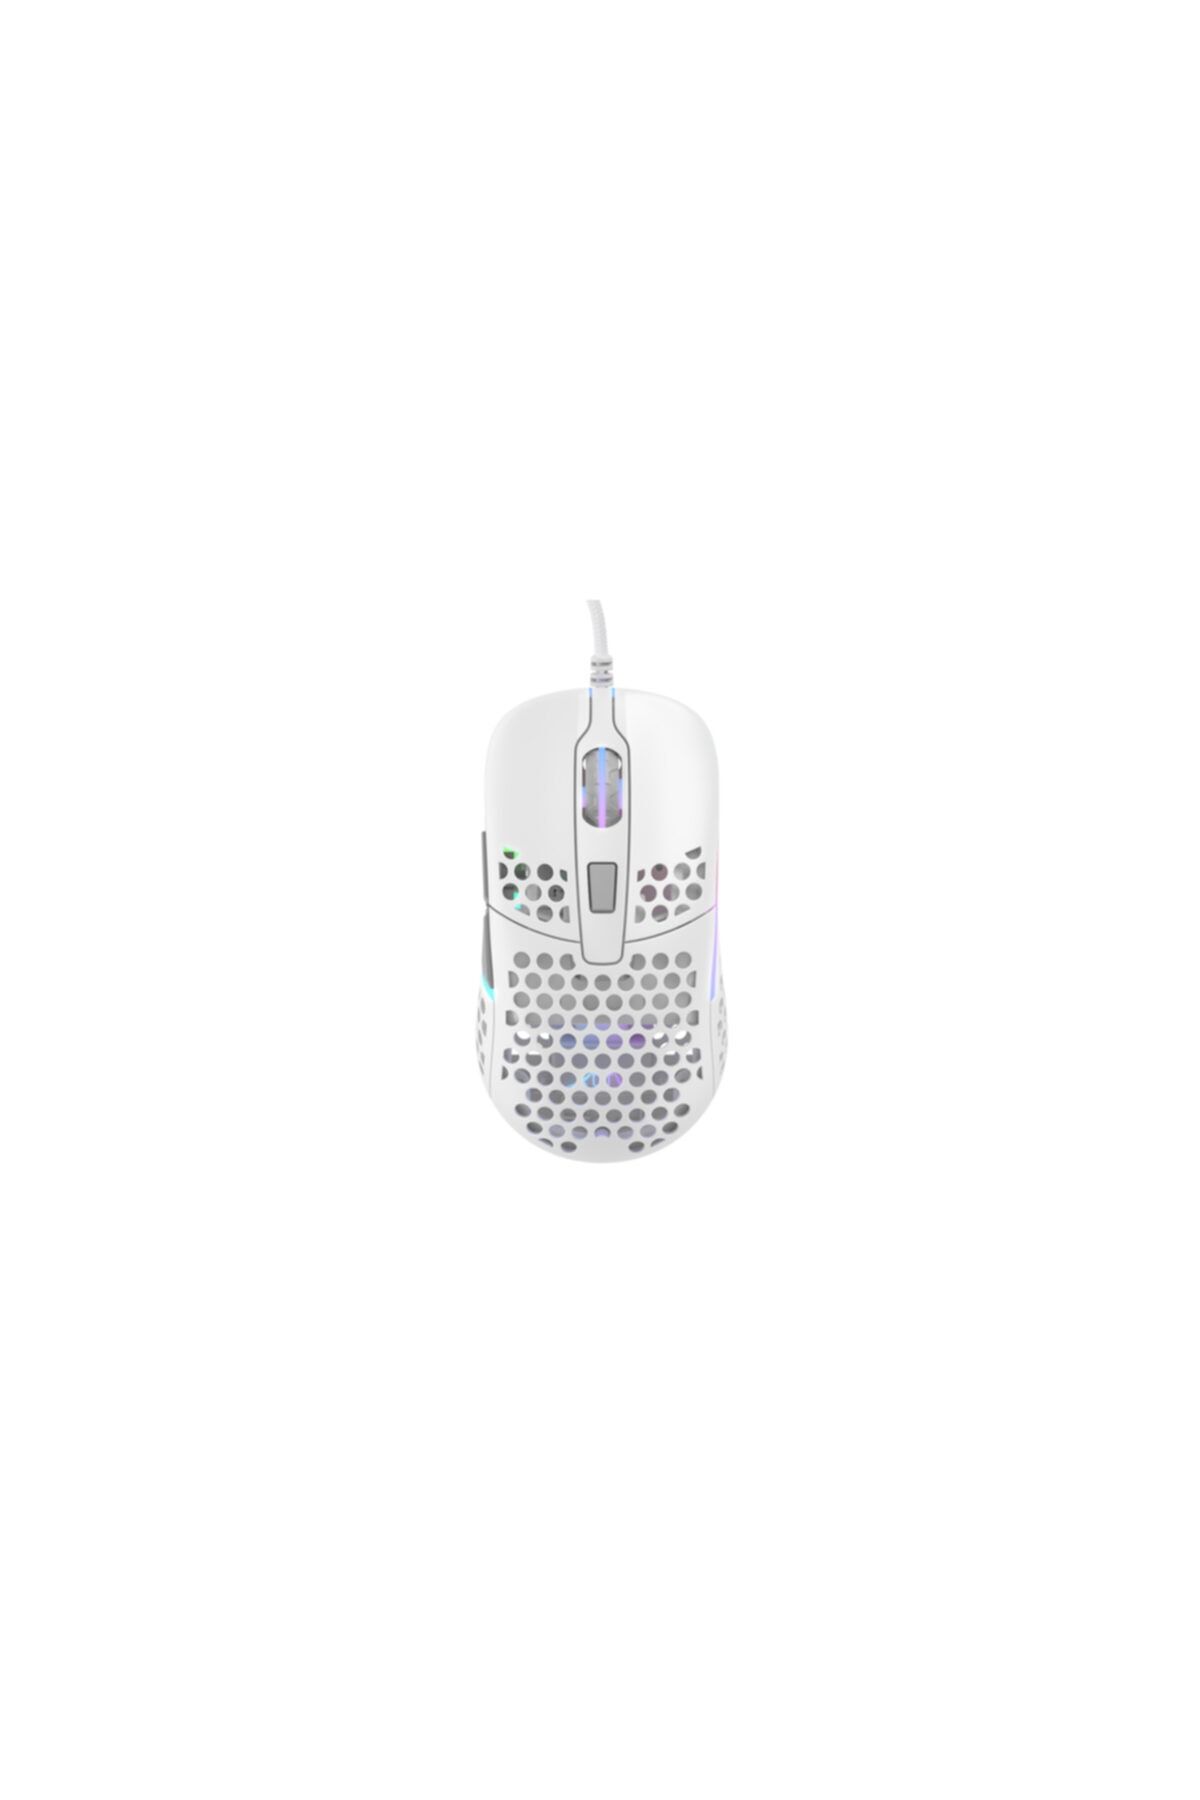 Xtrfy M42 Rgb Ultra-lıght Oyuncu Mouse - Beyaz